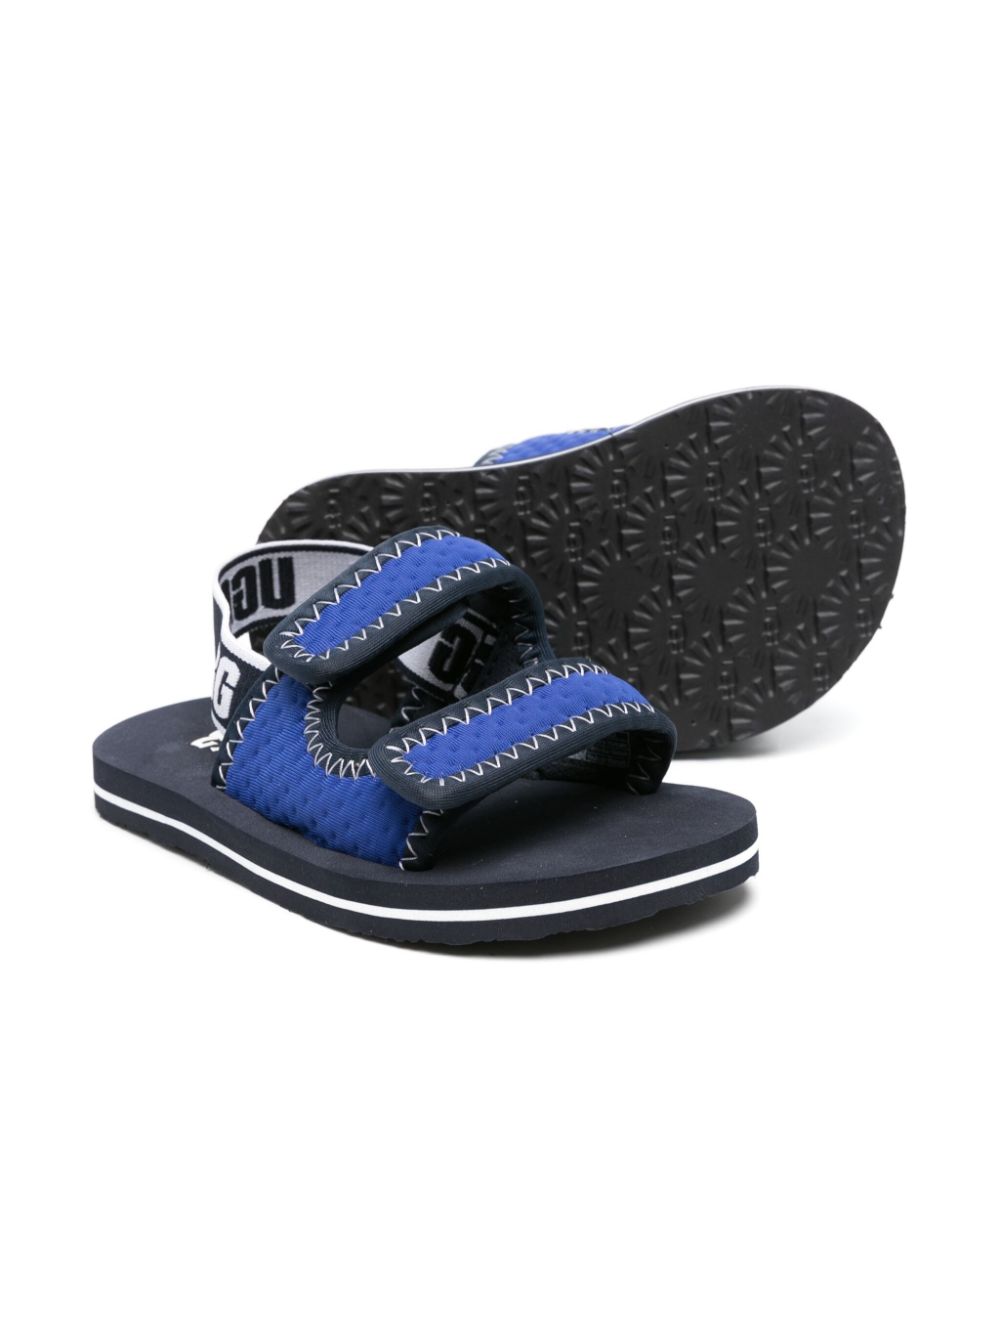 Sandales unisexes noir/bleu